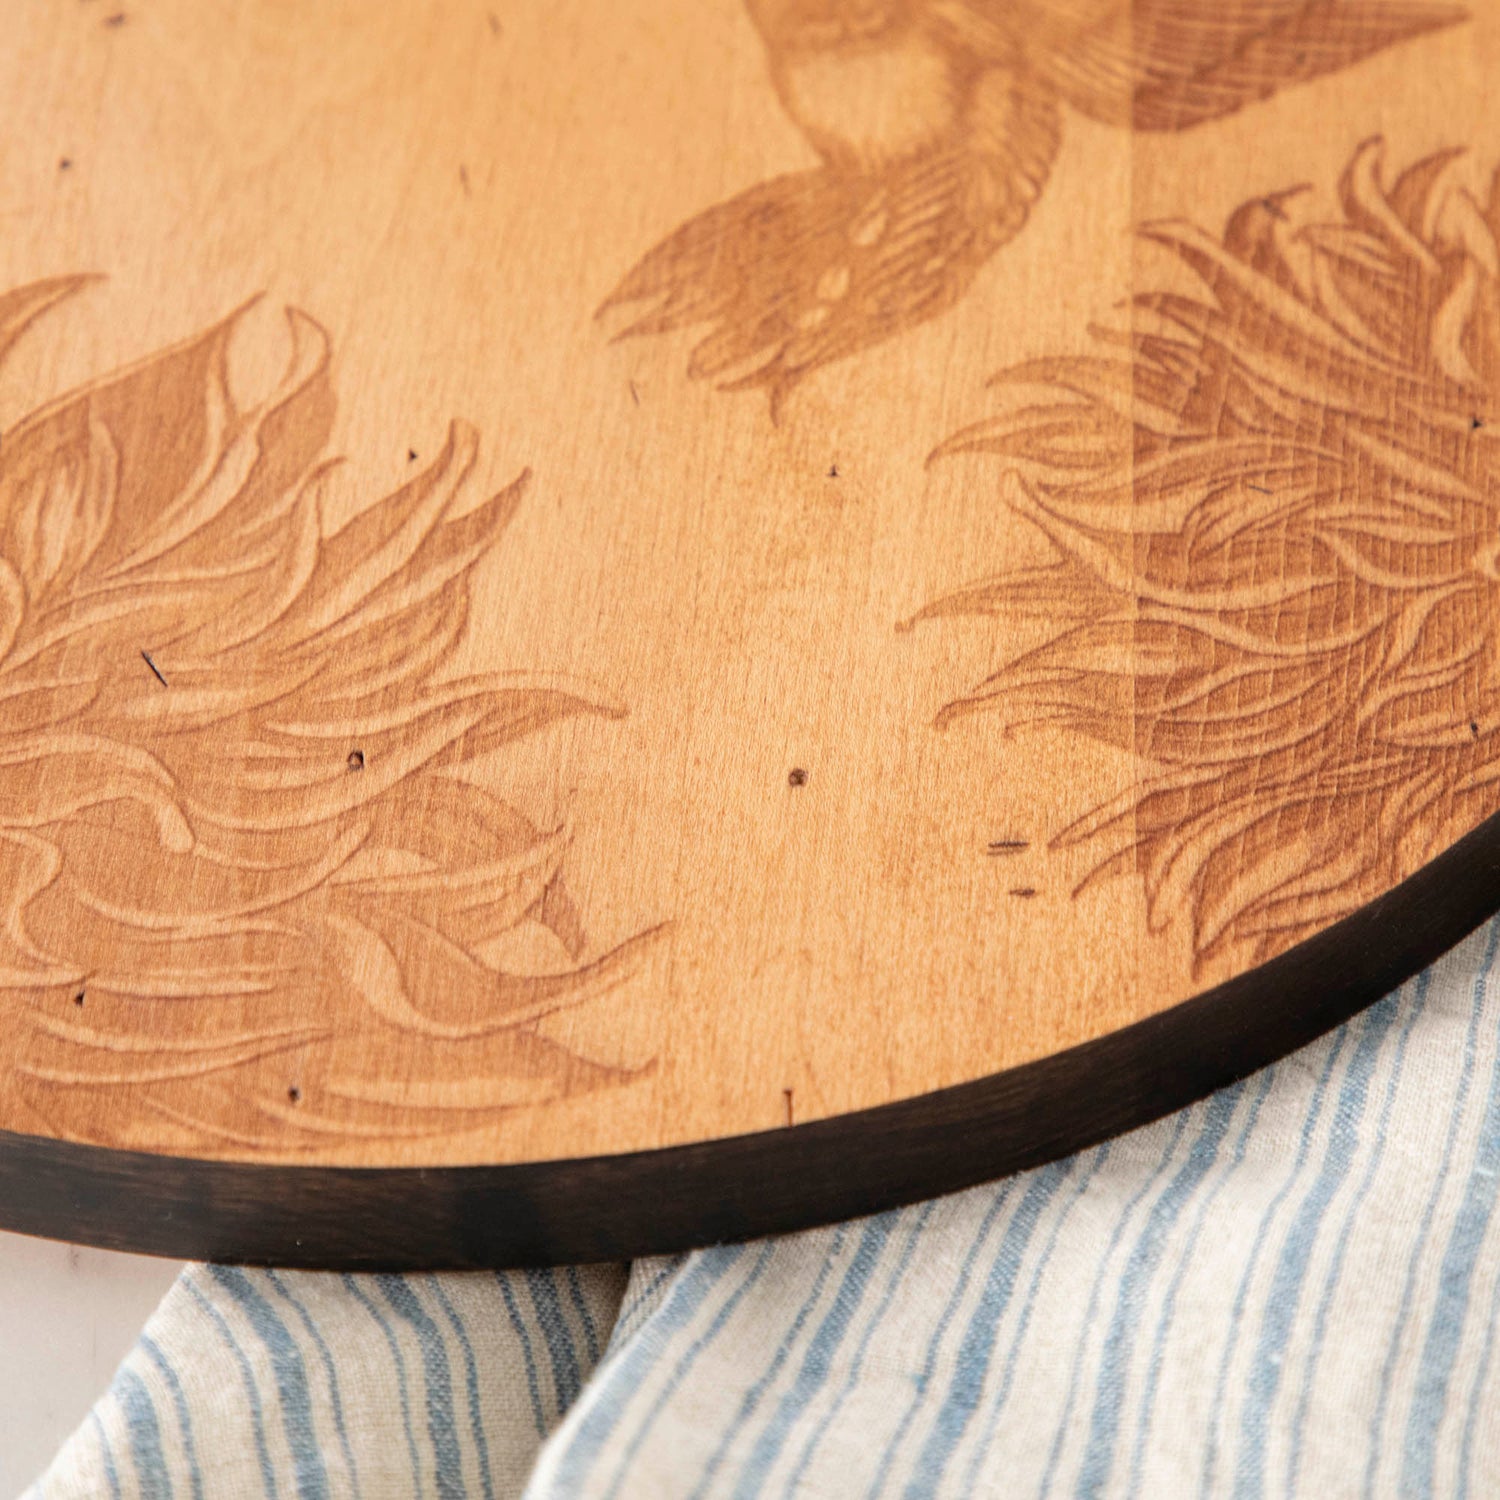 A JK Adams Hummingbird Maple Artisan Round Charcuterie Board.